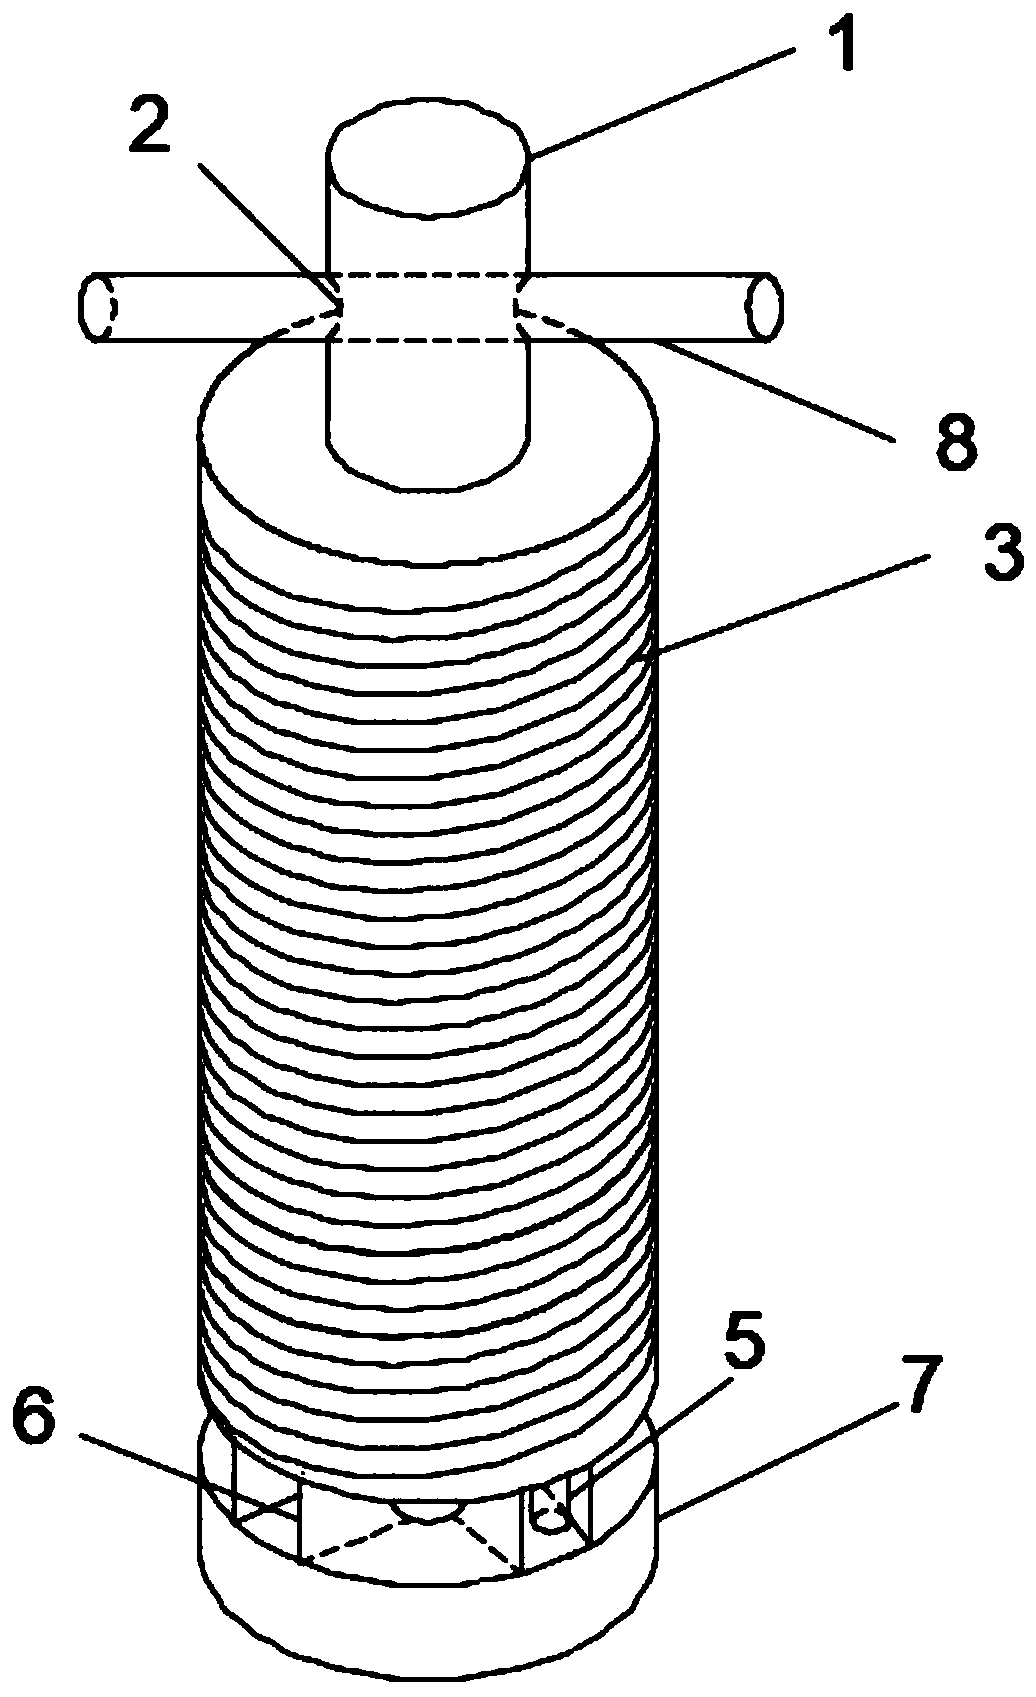 A detachable single side bolt and its use method